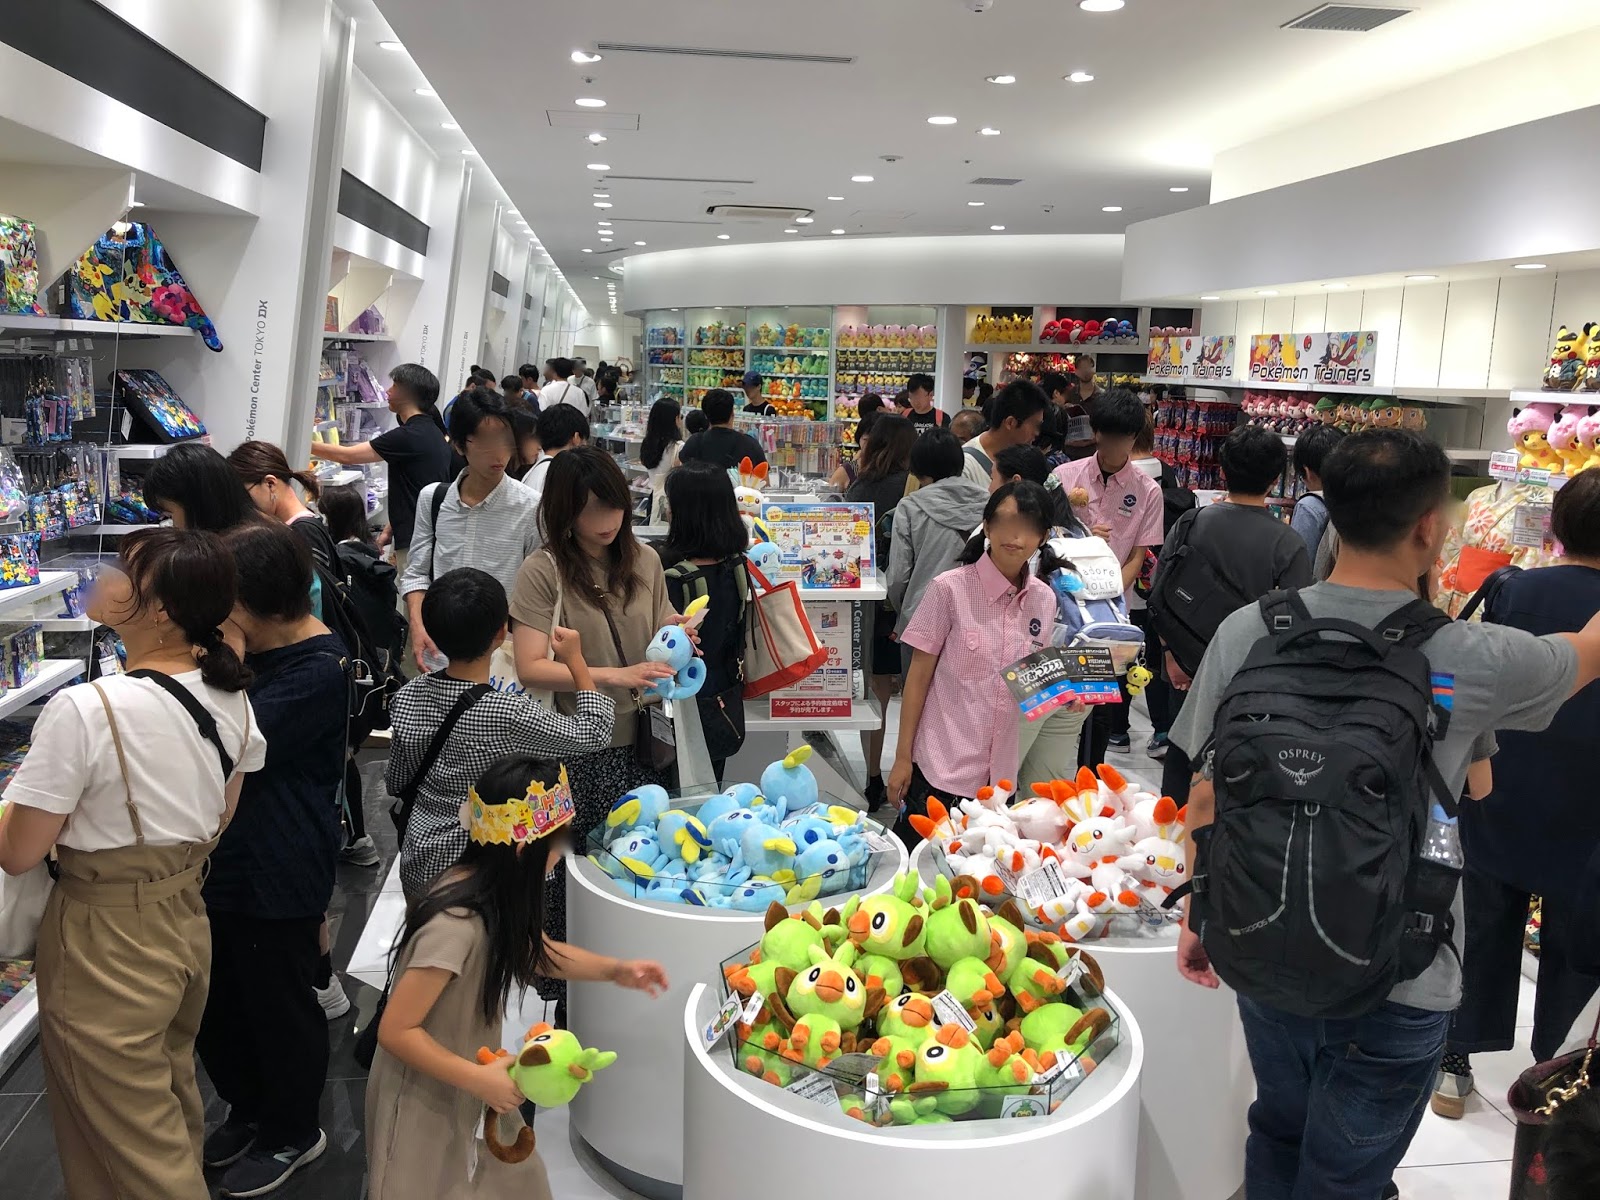 Pokemon Center Tokyo DX Ginza - The Best Japan